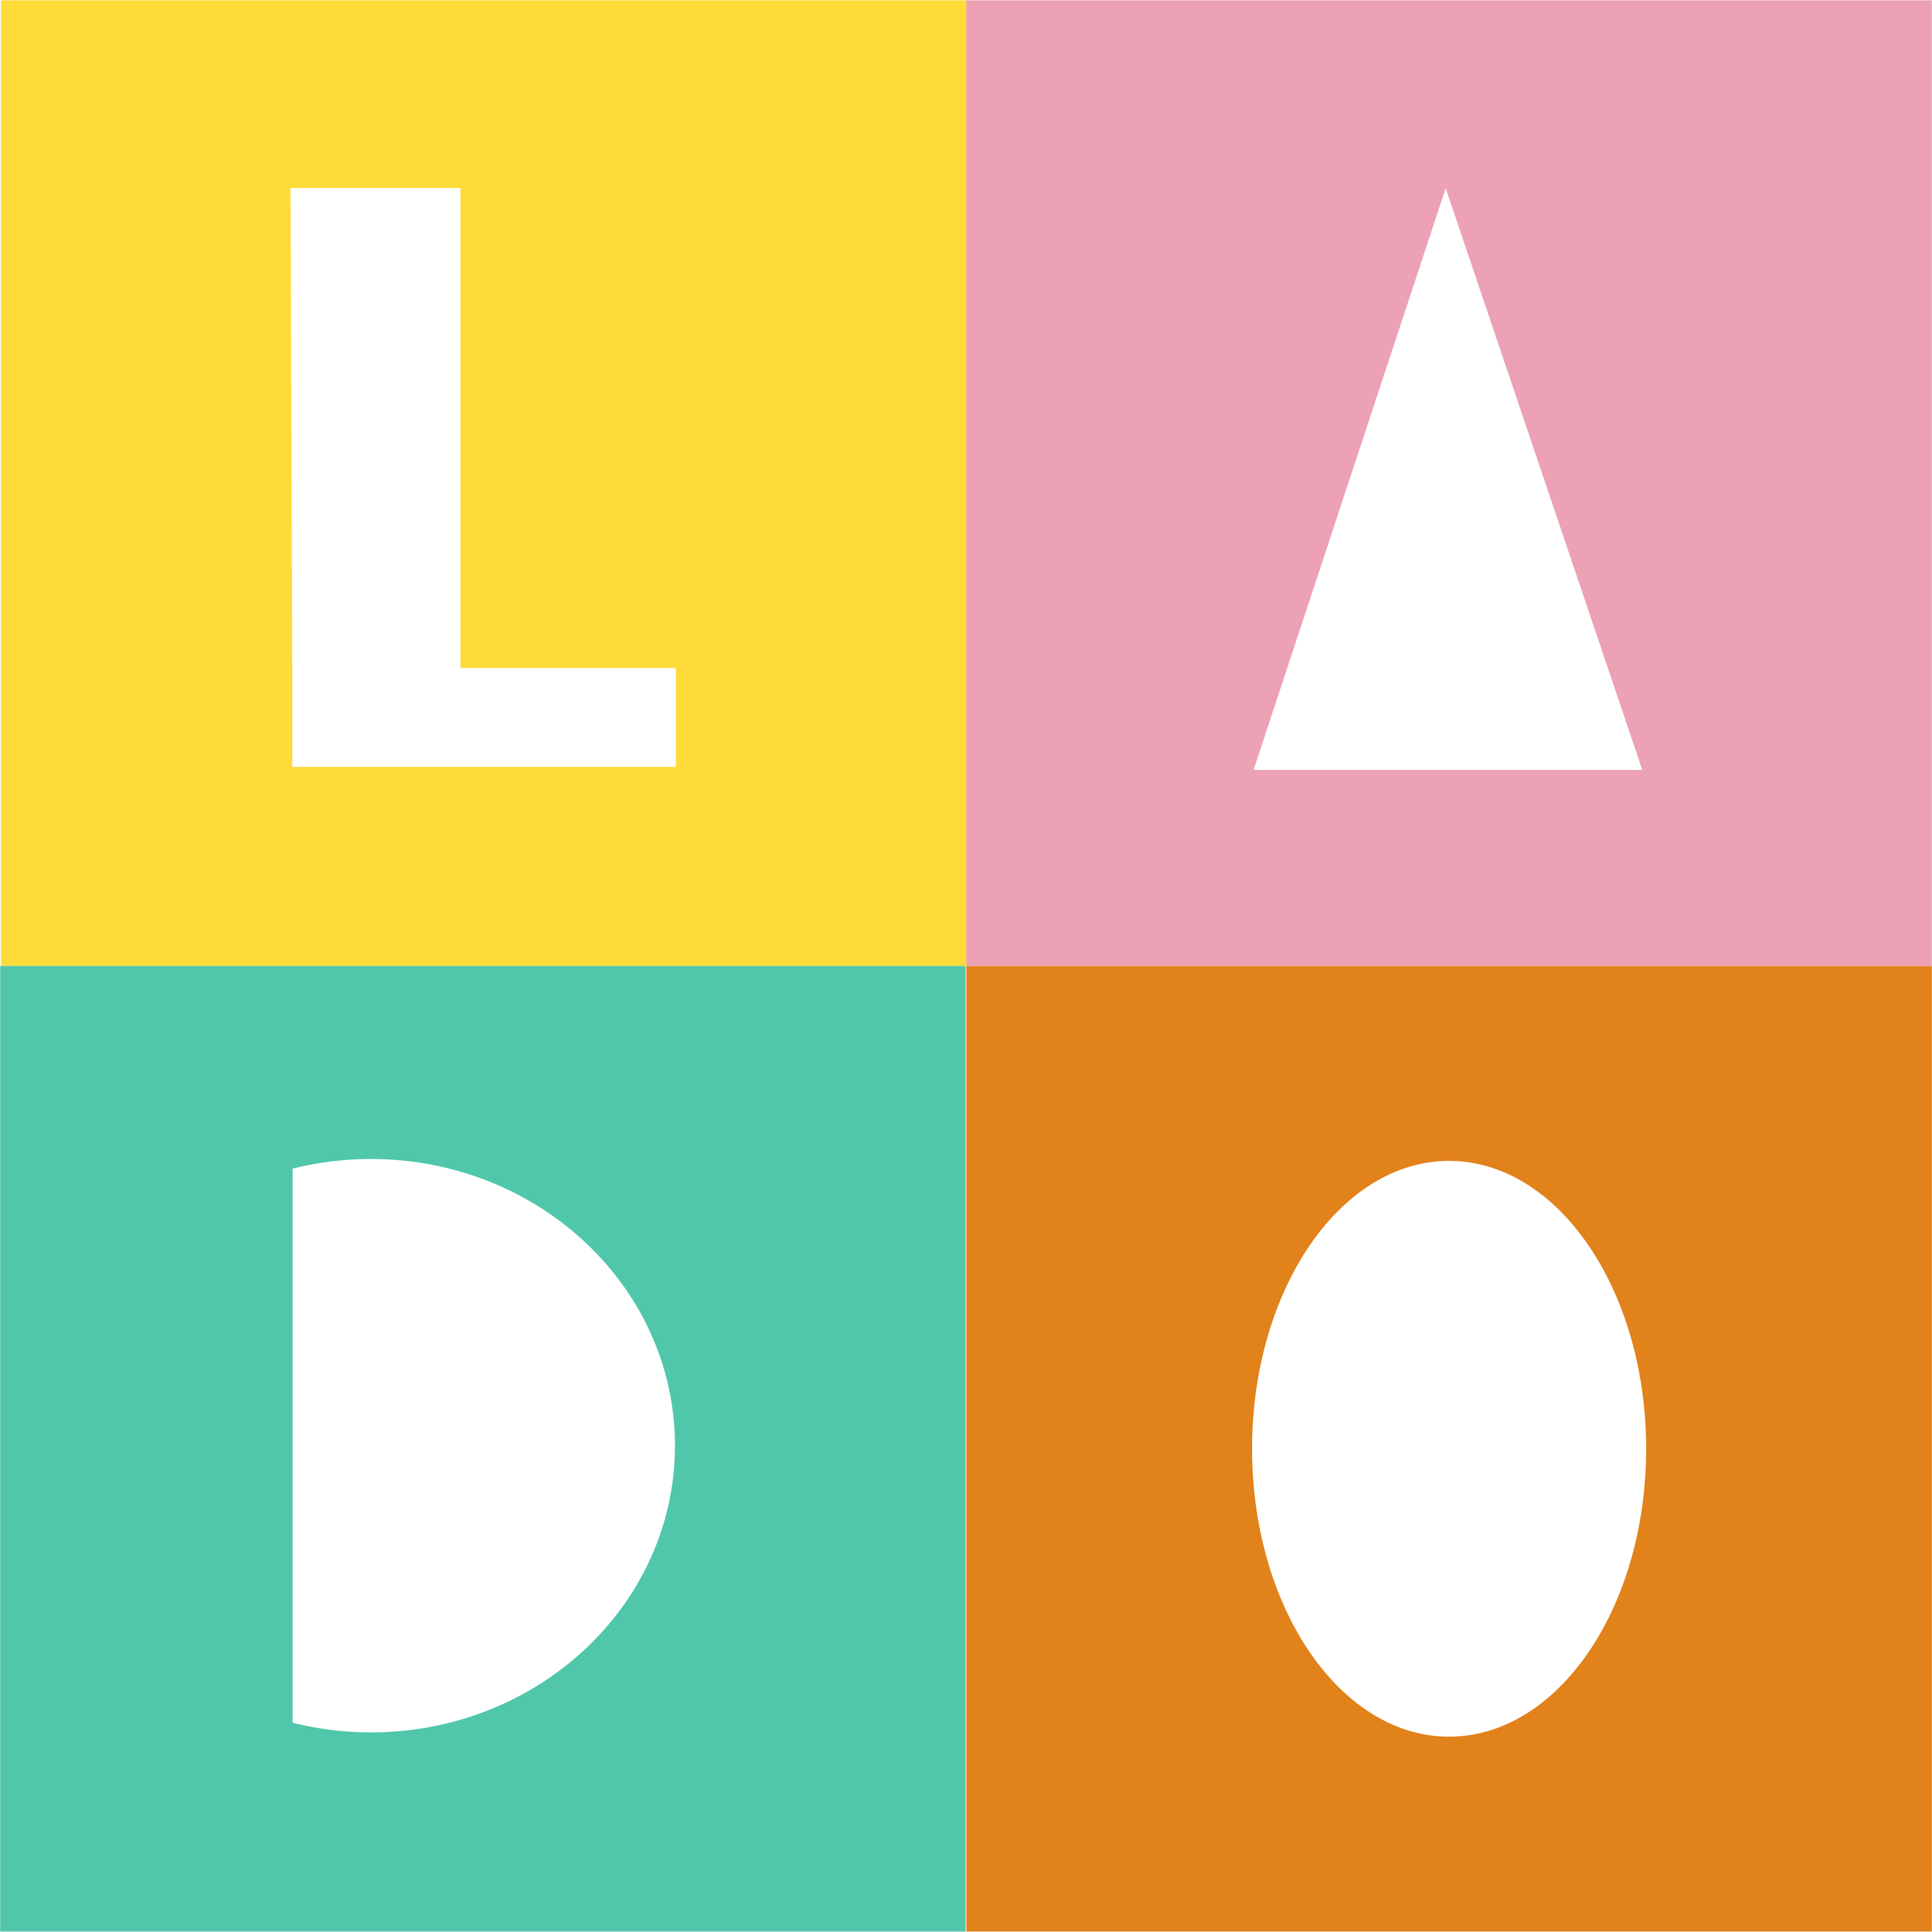 Laboratory of Design against Oppression (LADO)